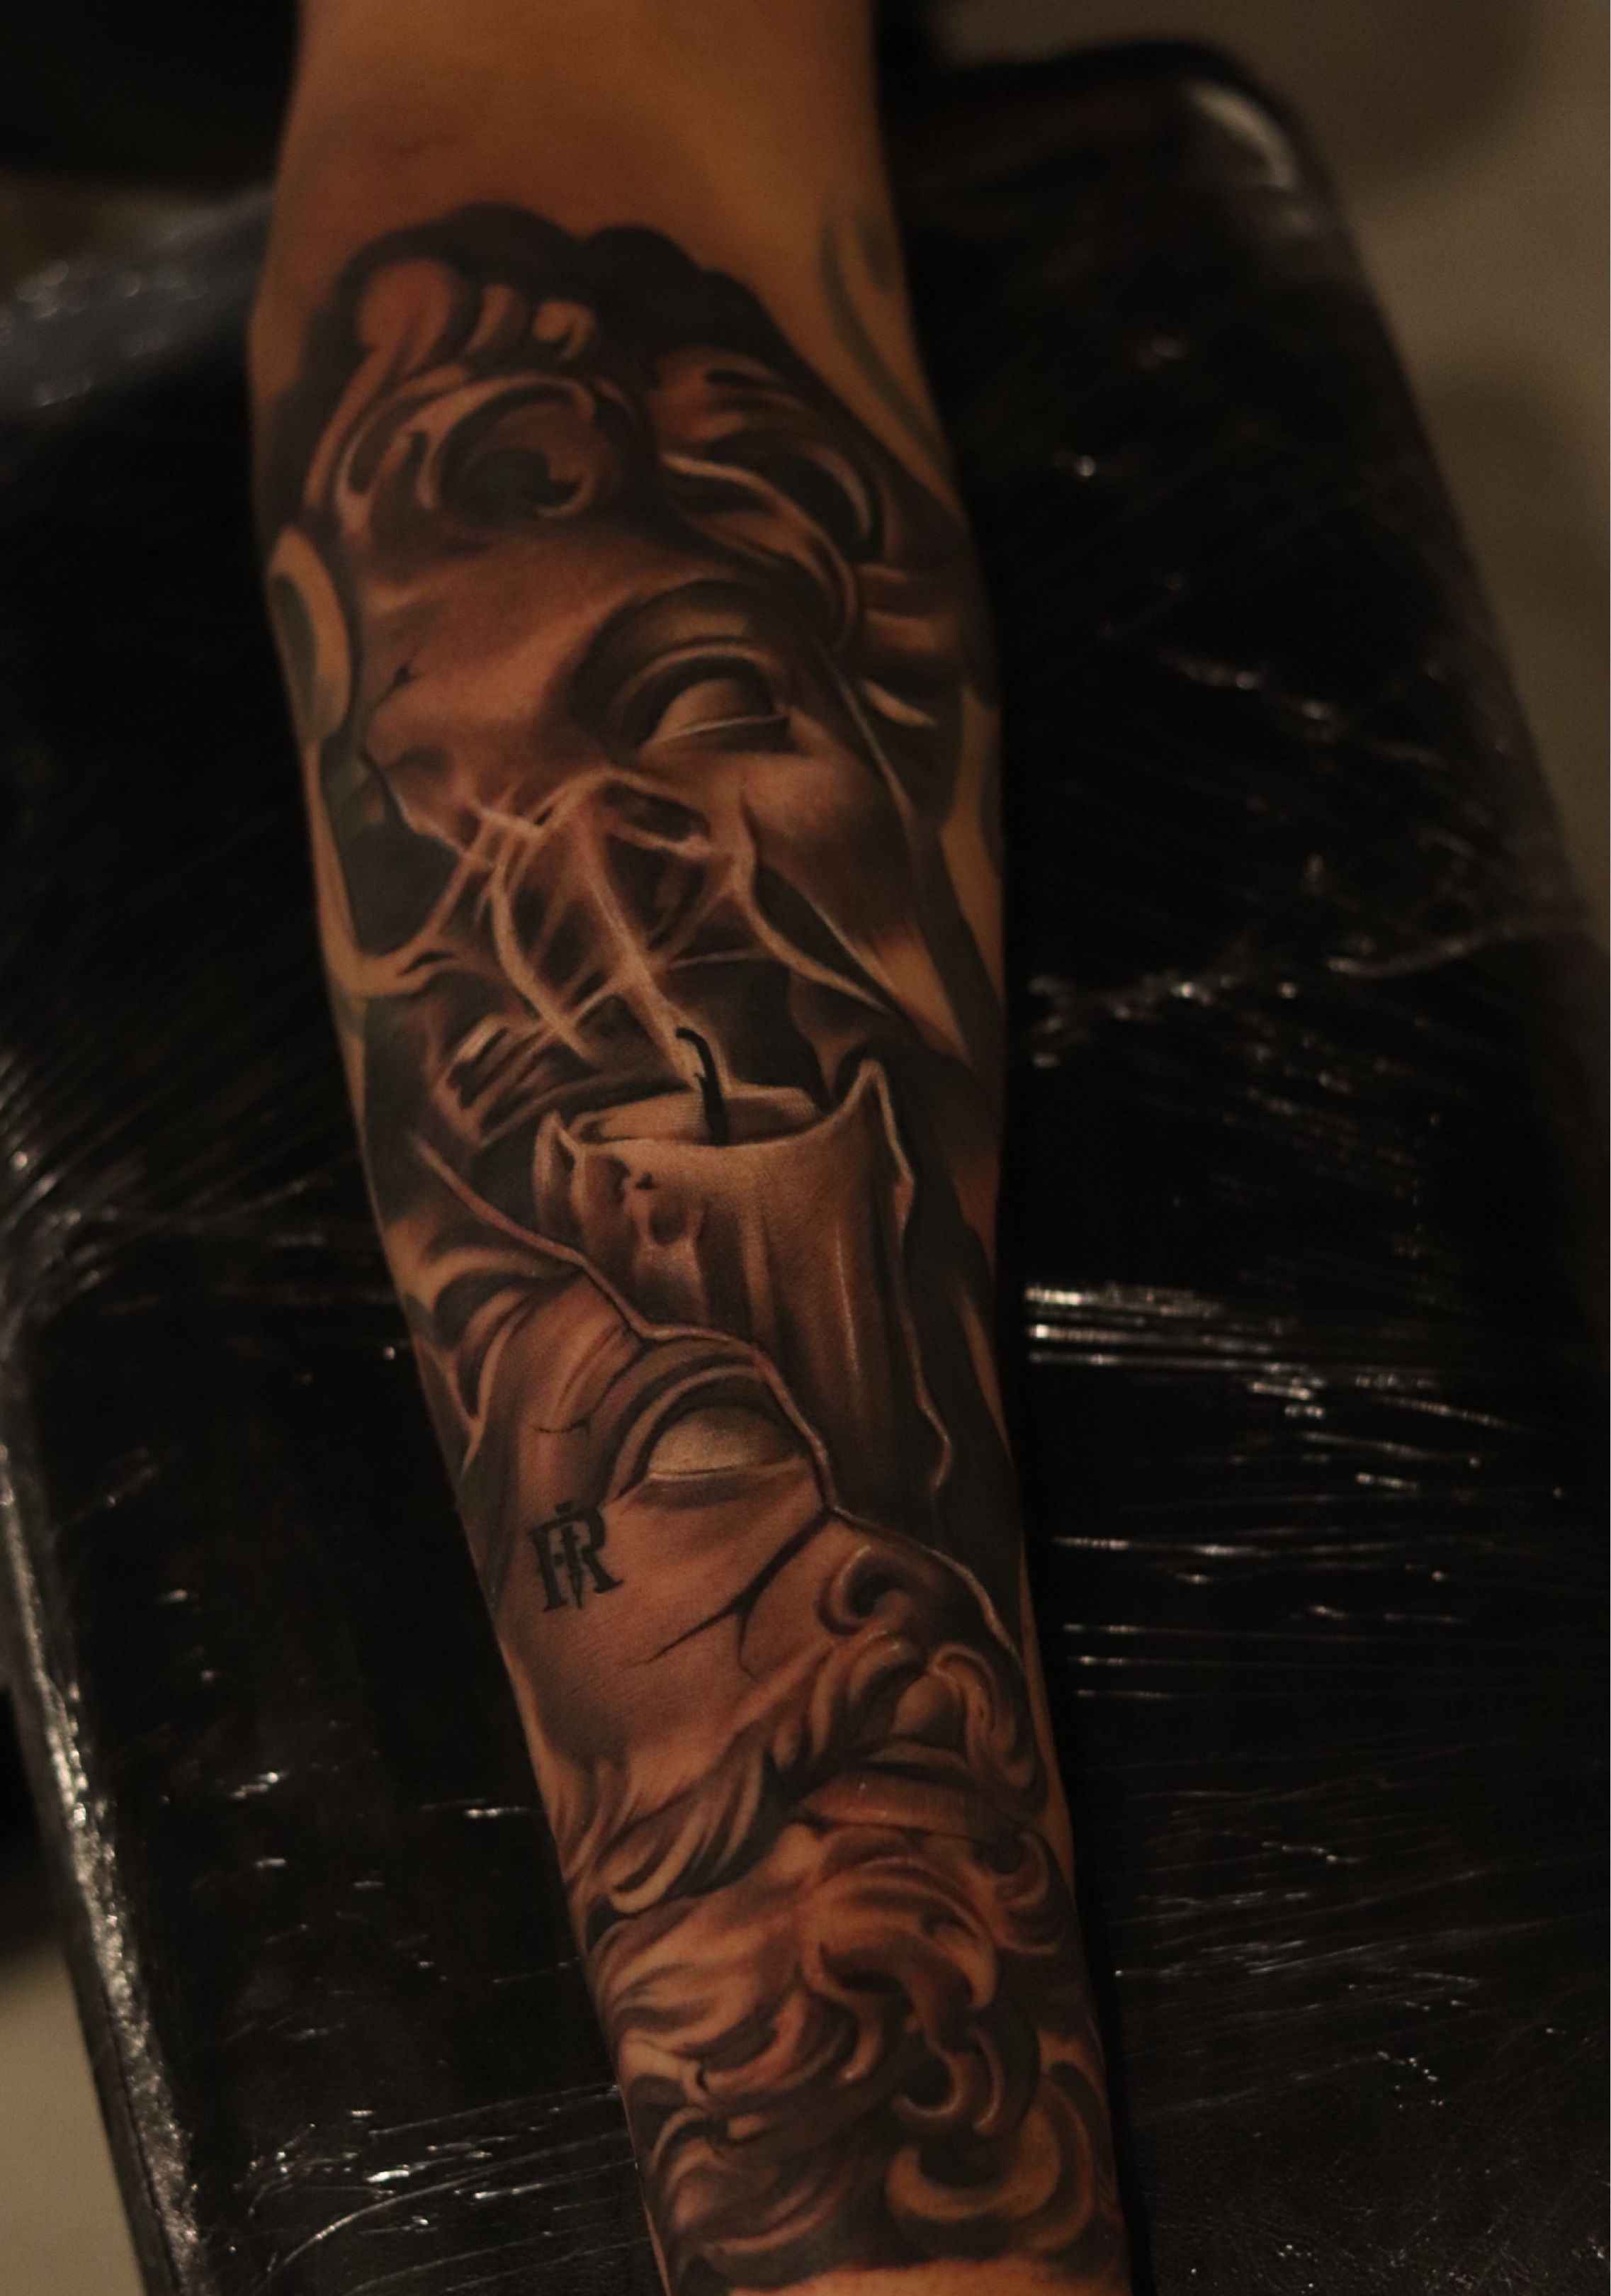 Tattoos Inspired by Greek Mythology | CafeMom.com